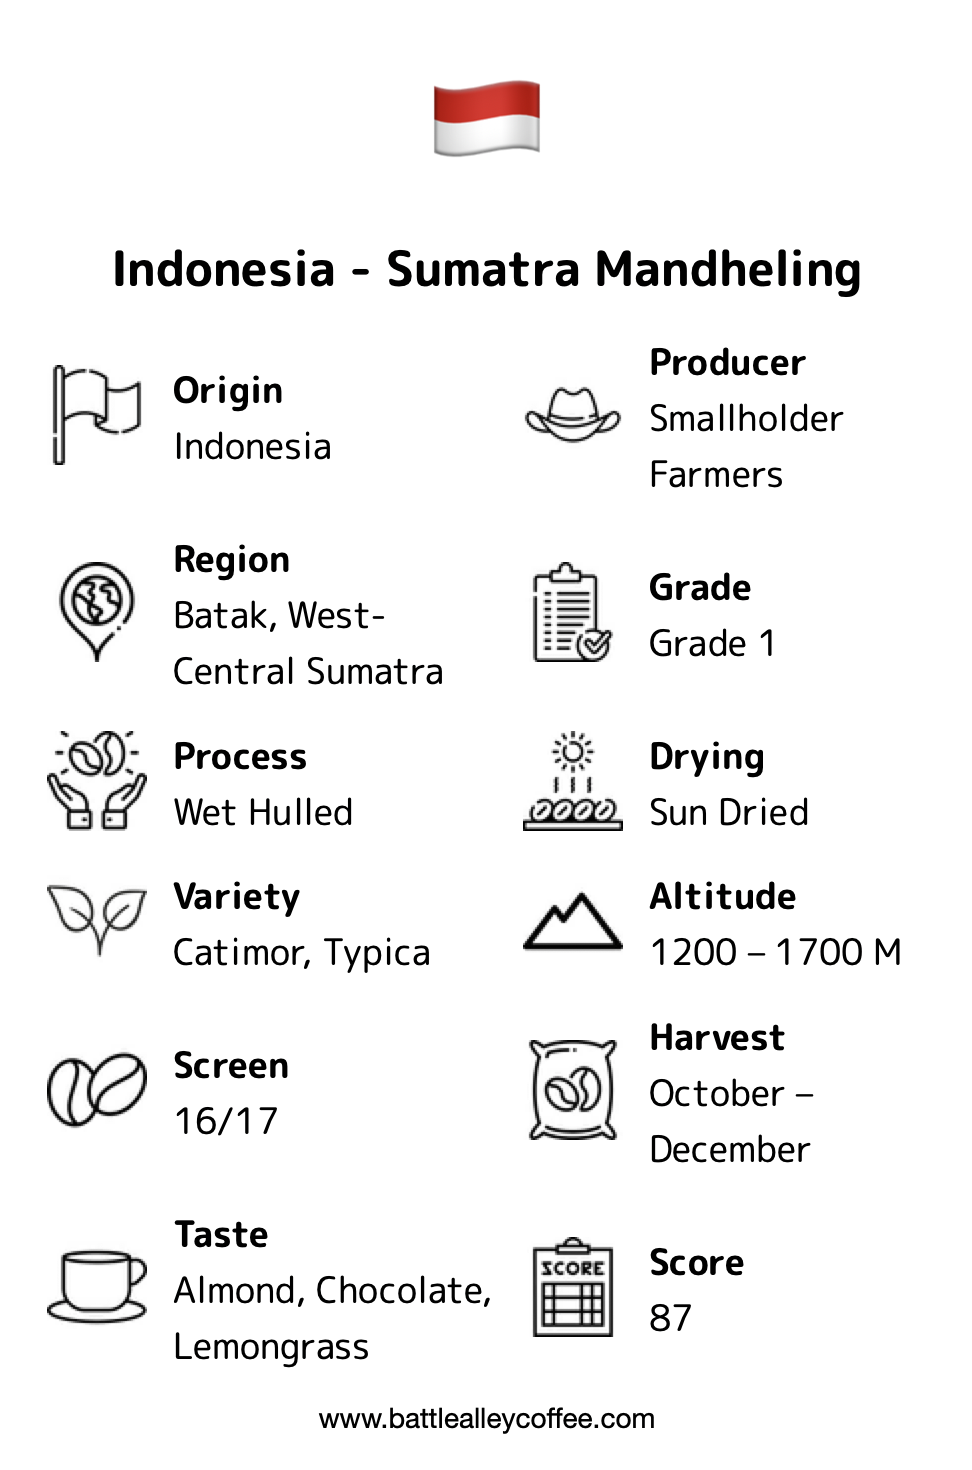 Sumatra coffee description